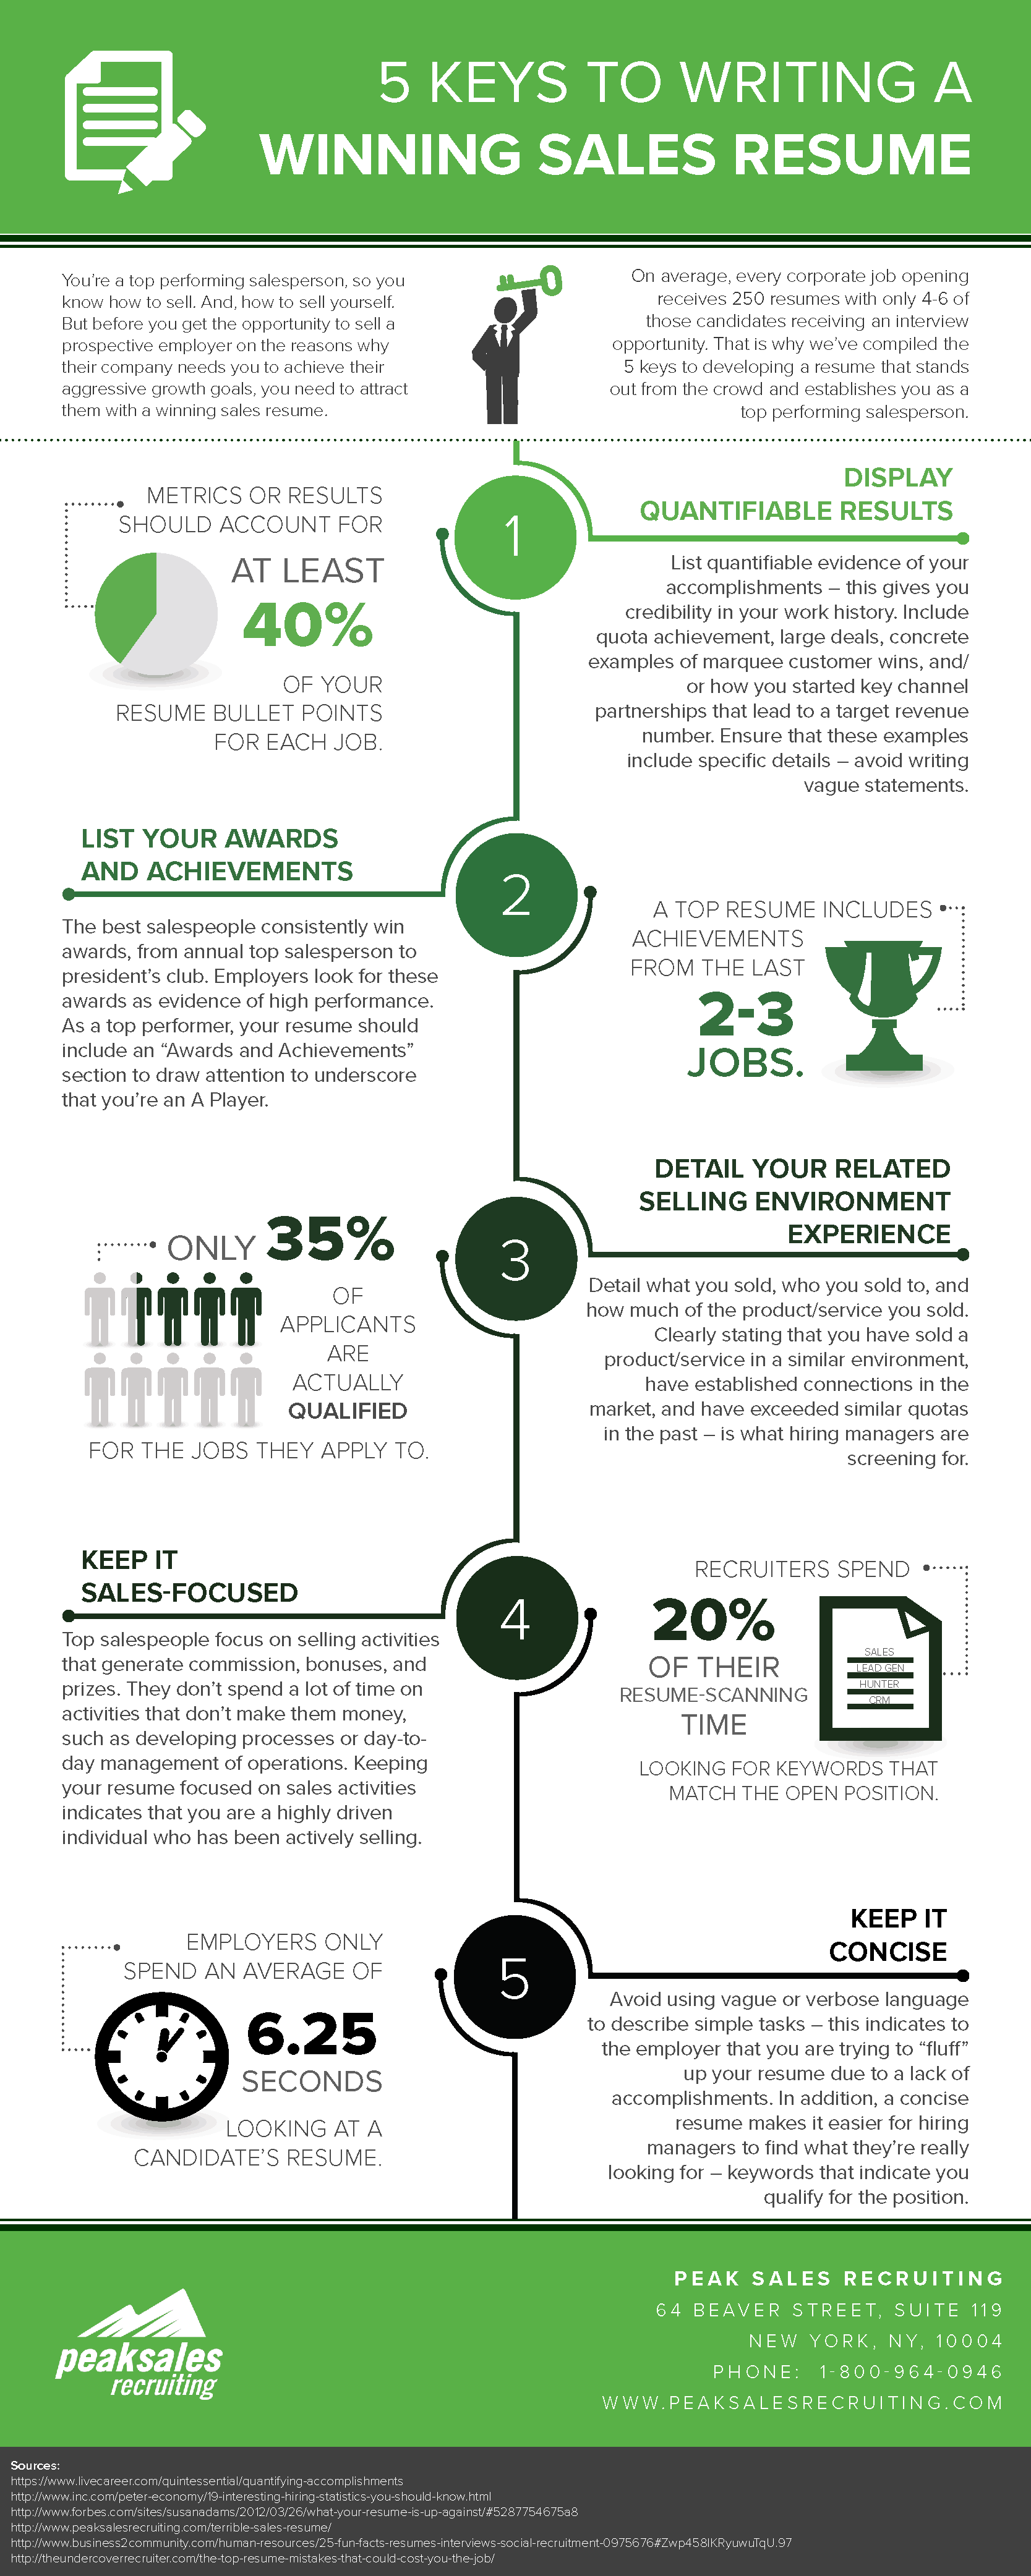 Winning Sales Resume Infographic